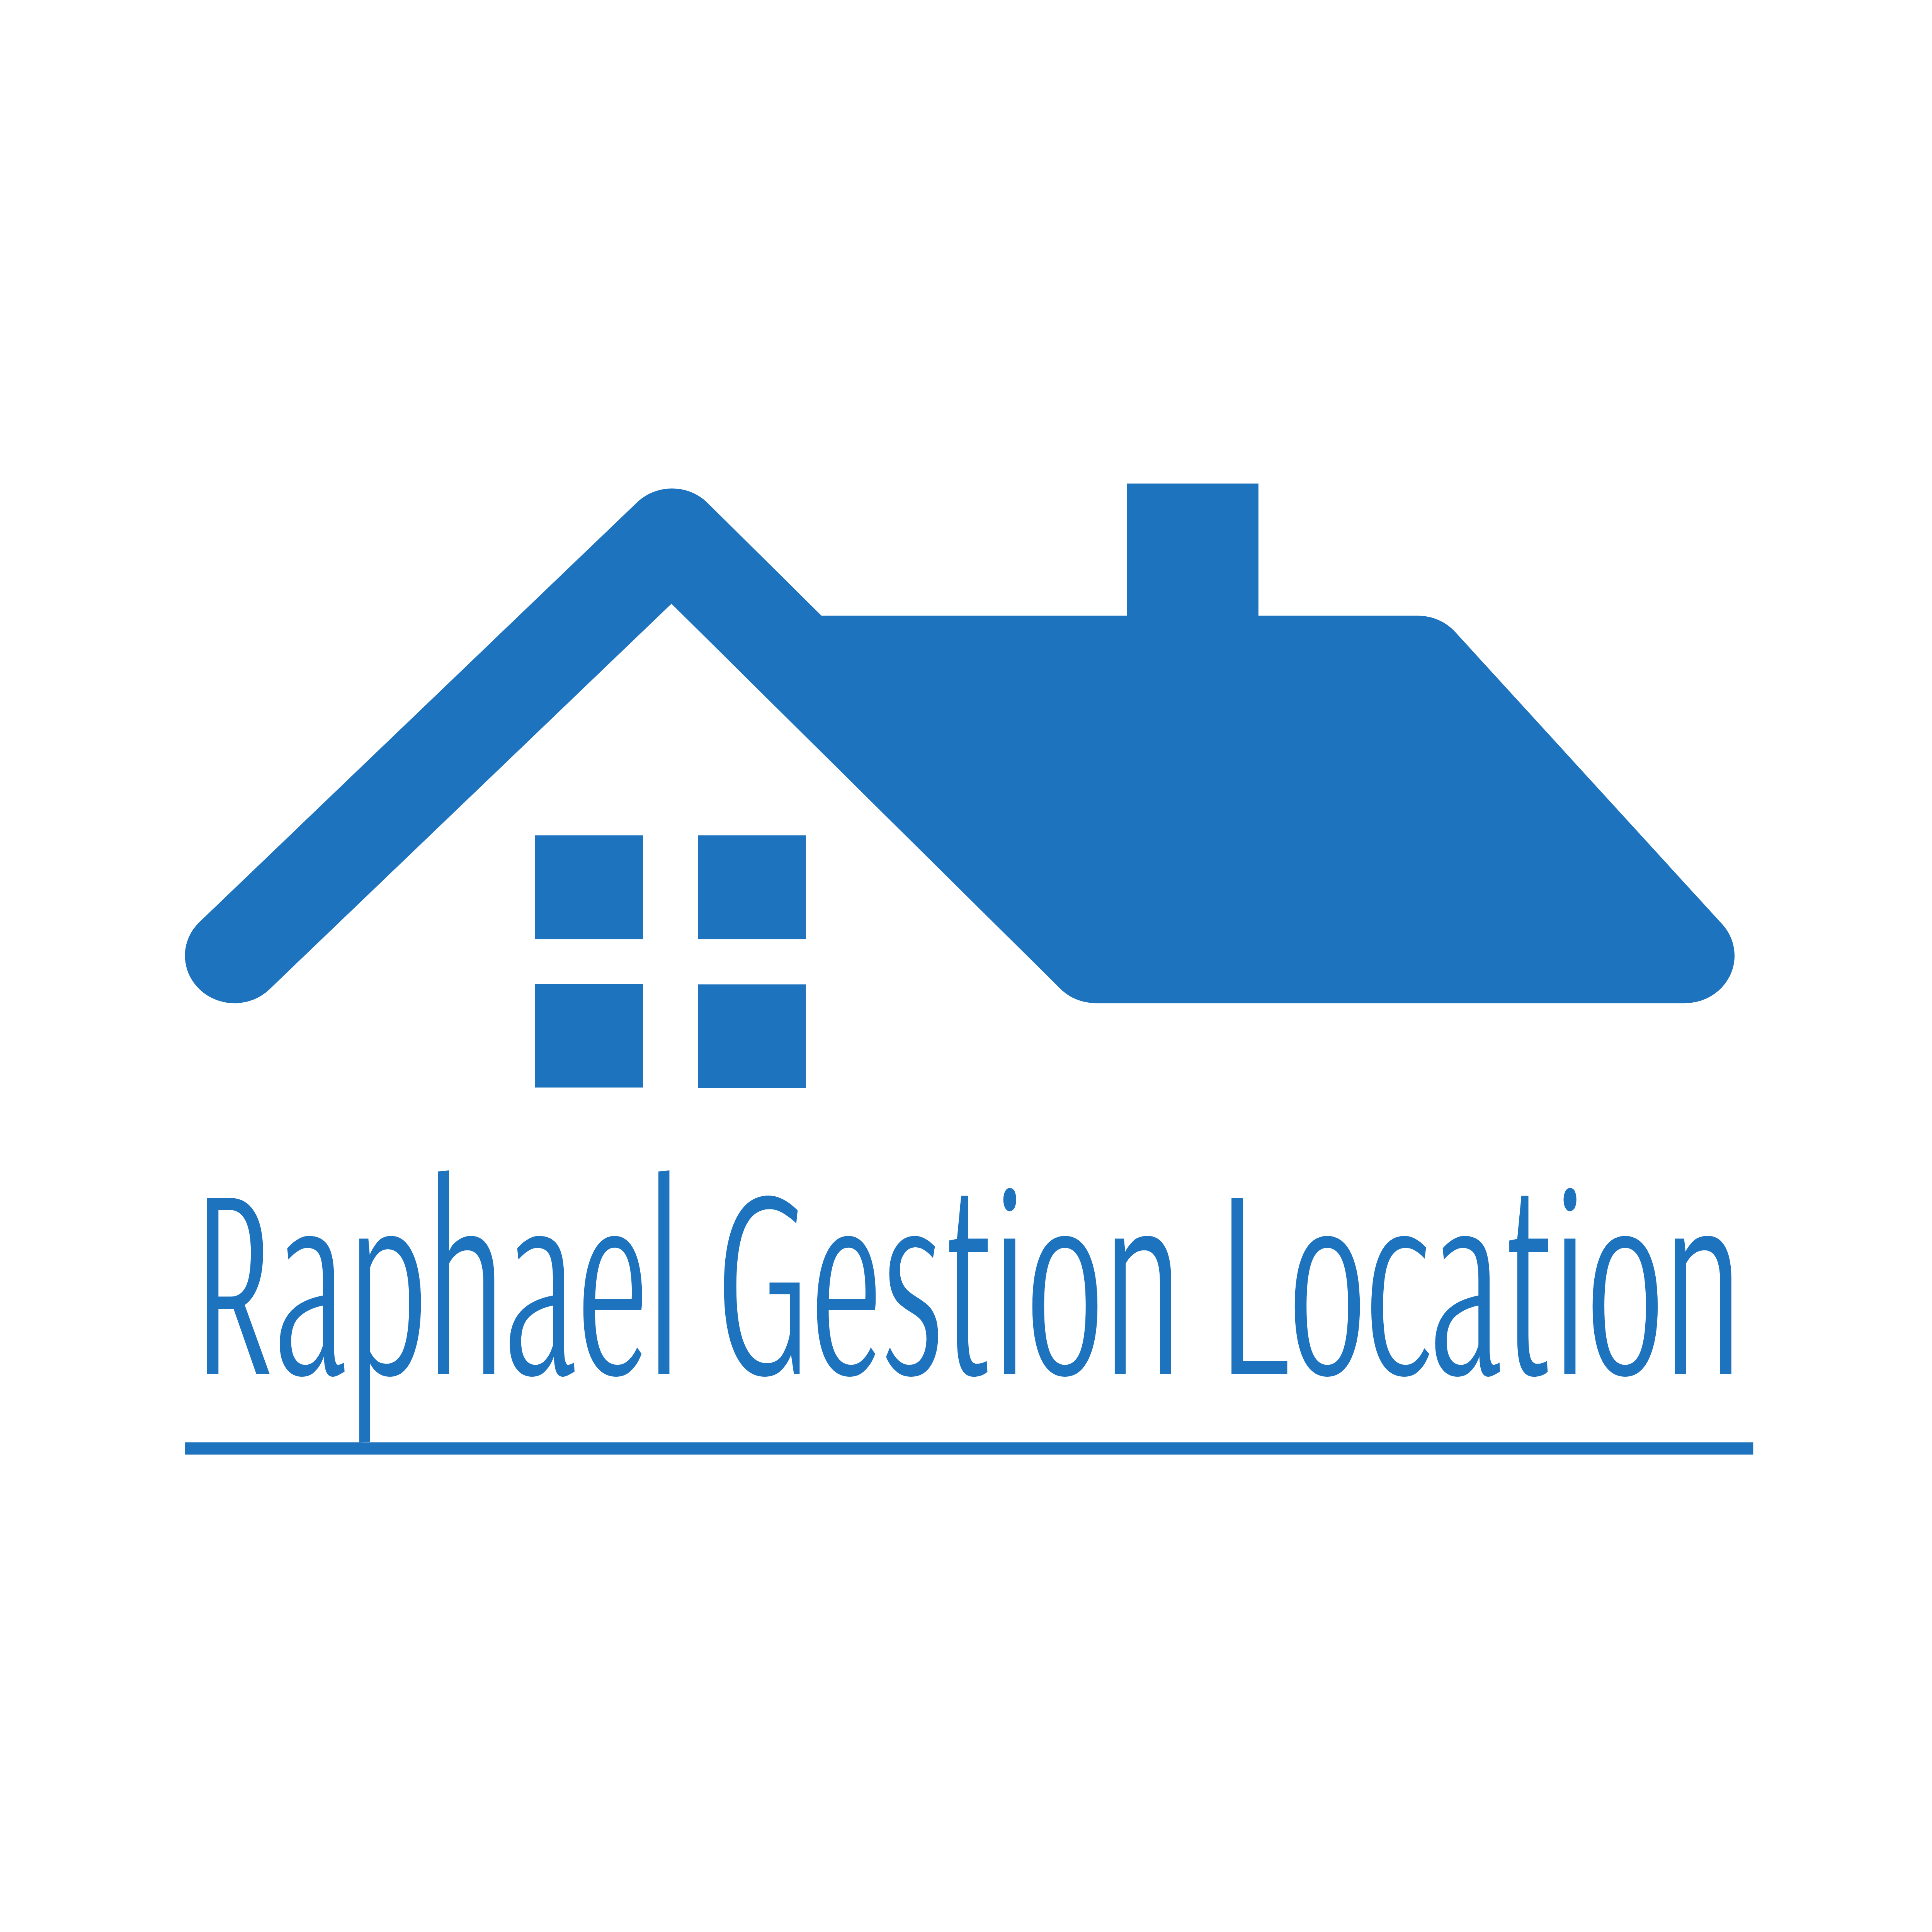 RAPHAEL GESTION LOCATION